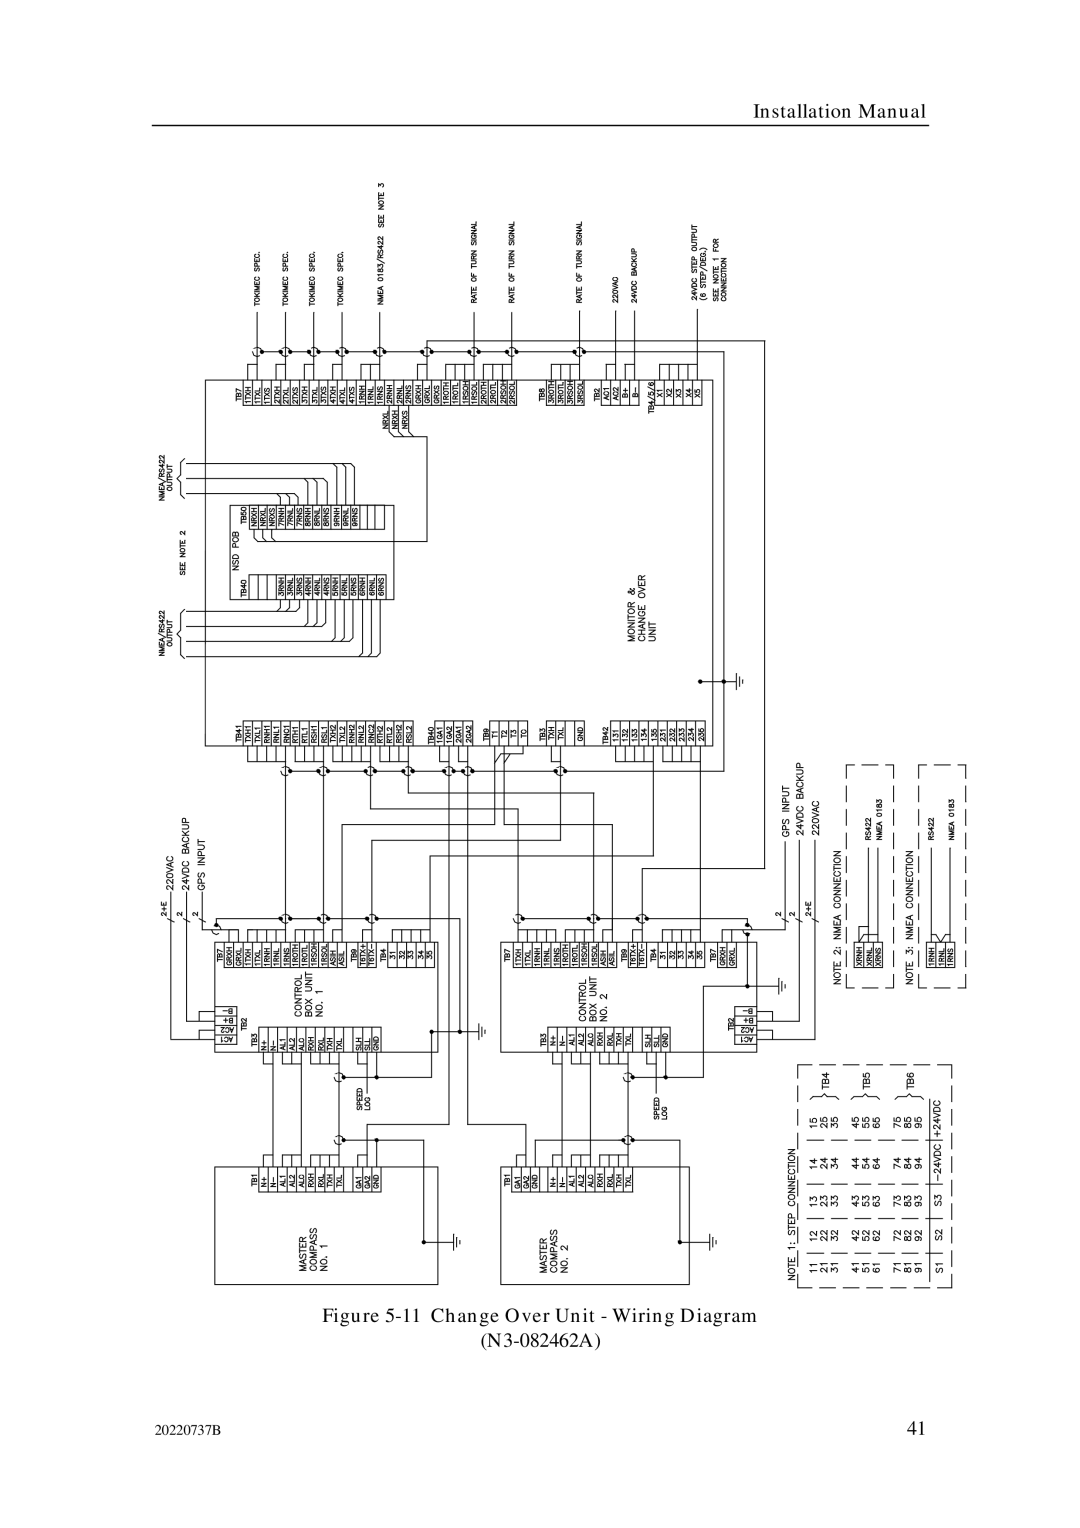 Simrad RGC12 manual Change Over Unit Wiring Diagram N3-082462A 